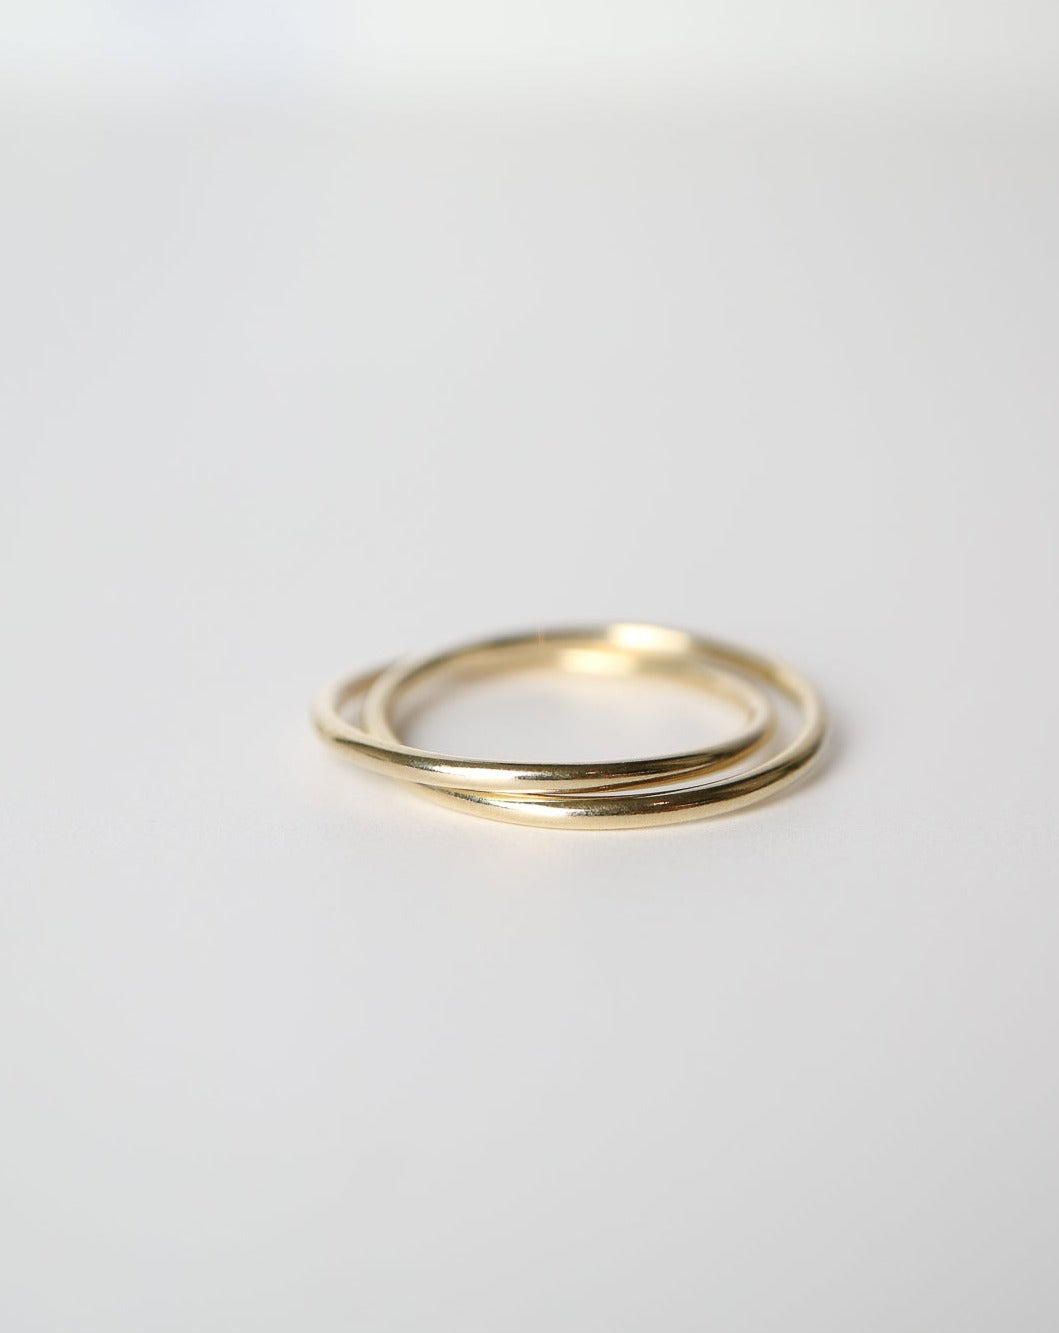 9ct gold Interlocking Ring from Jade Rabbit Designs